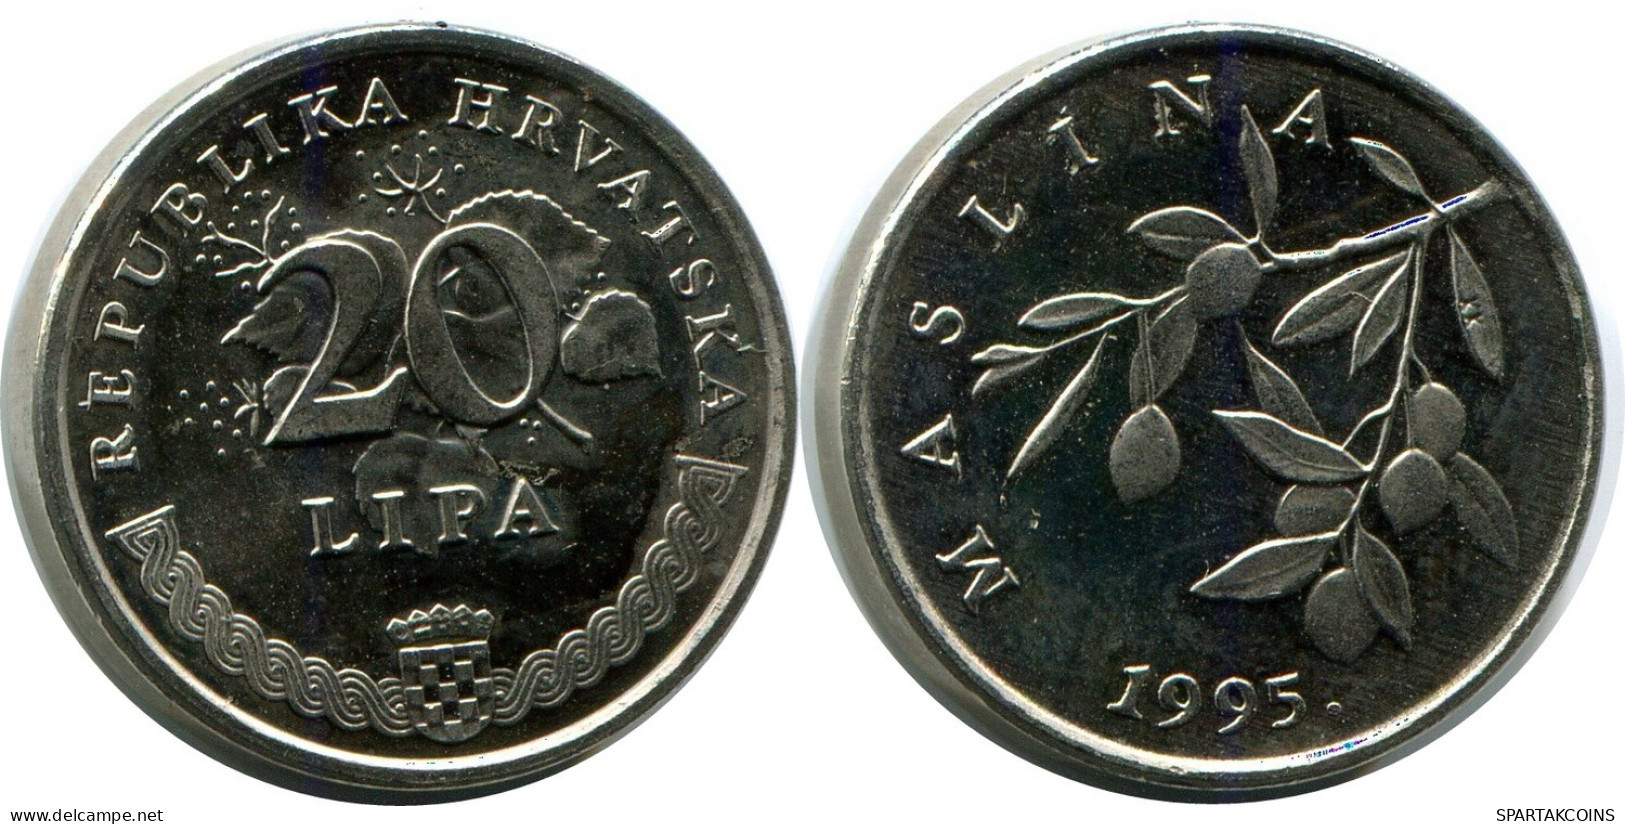 20 LIPA 1995 CROATIA Coin #AR930.U.A - Croatie